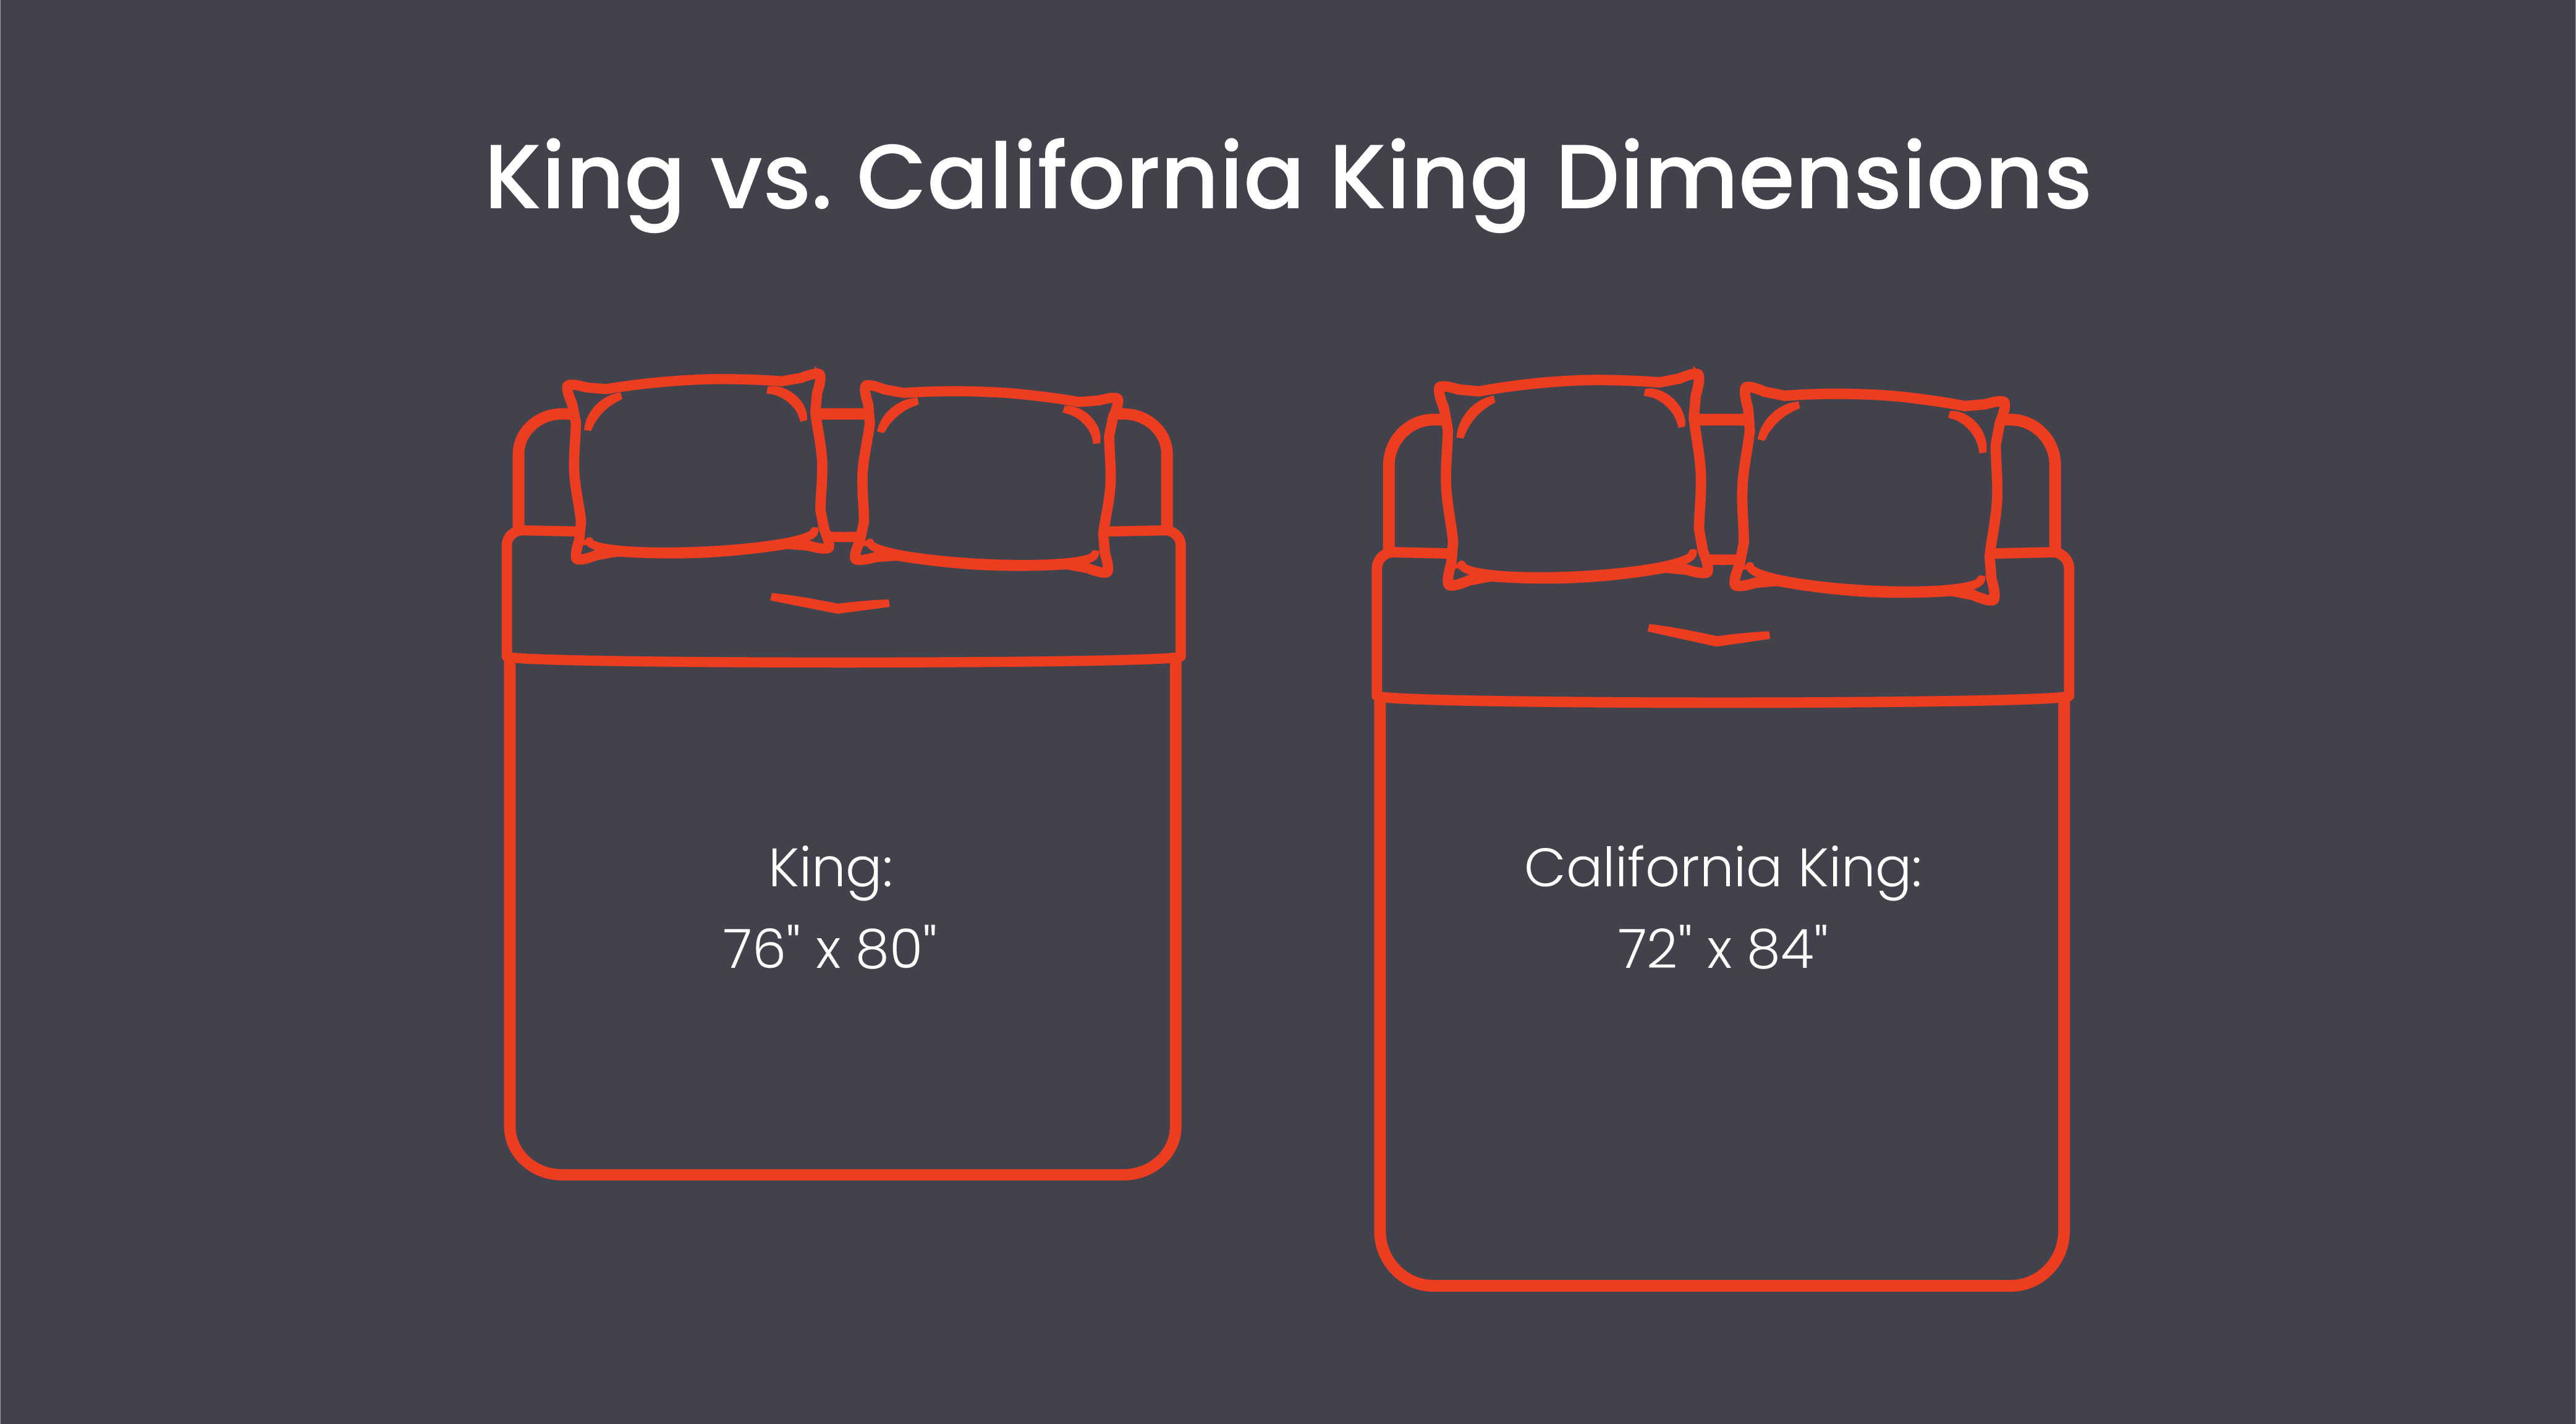 King vs. California king dimensions